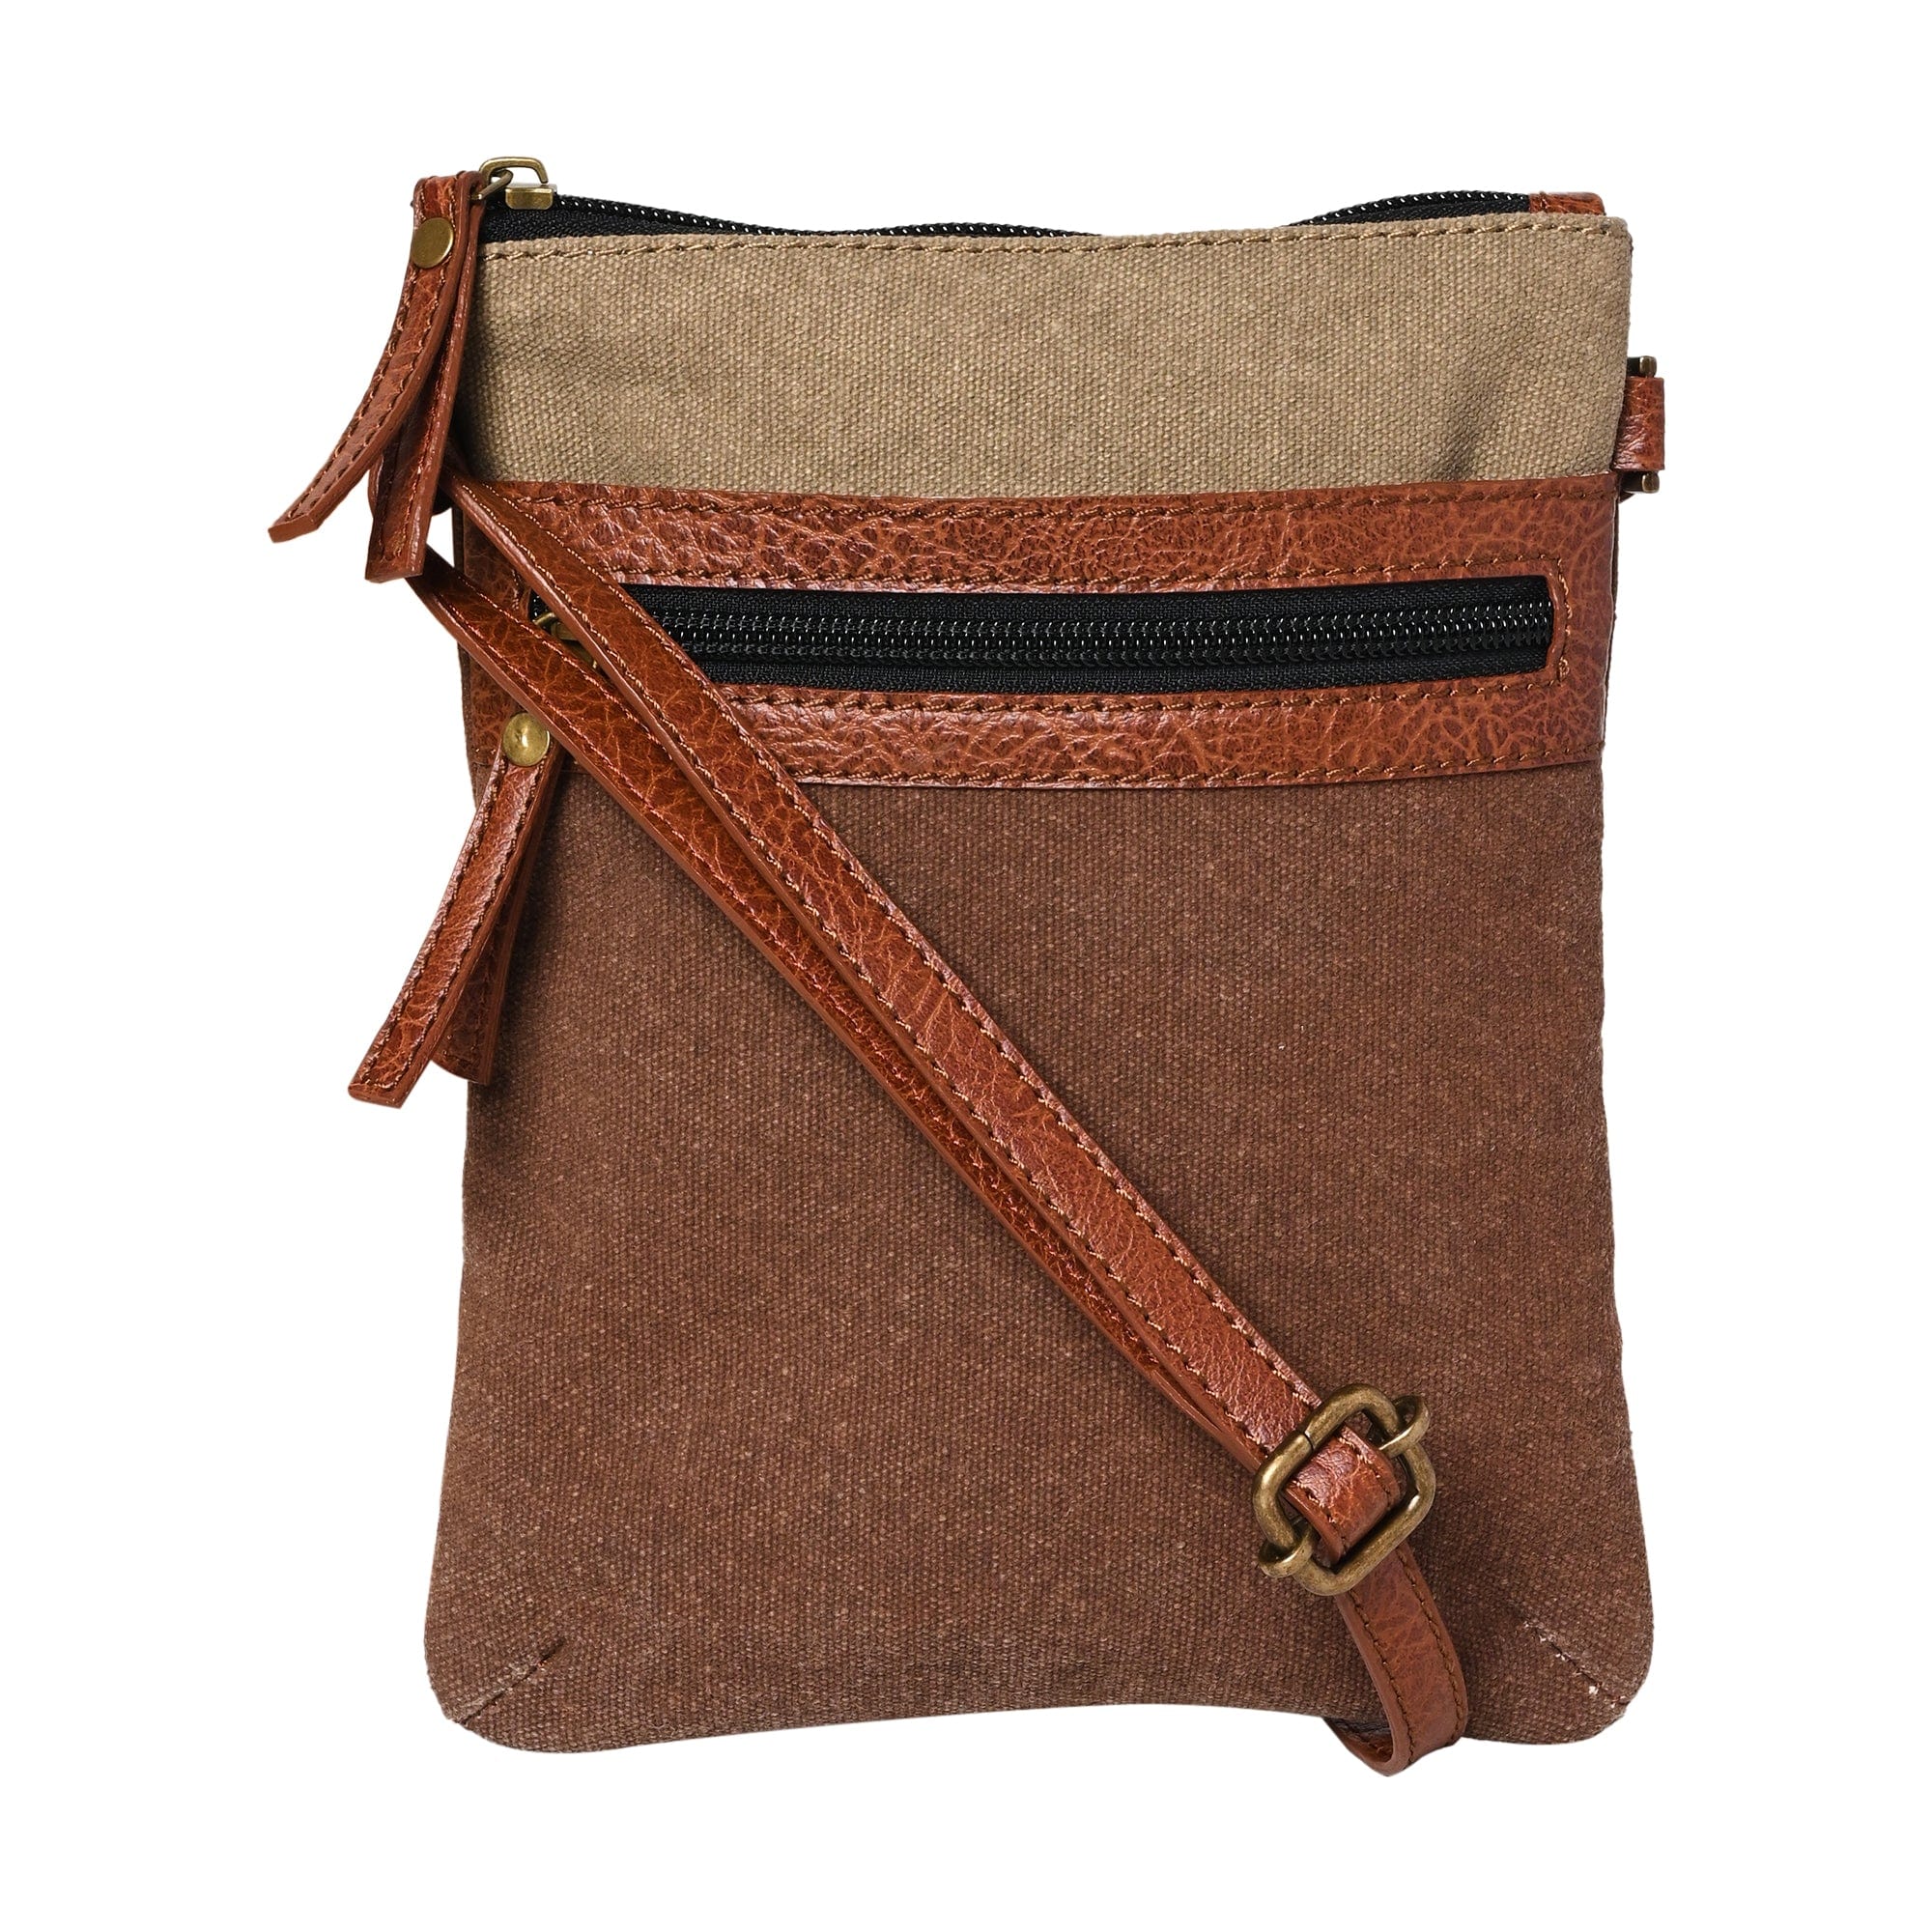 Mona-B Bags Mona B Small Messenger Crossbody Bag with Stylish Design for Girls and Women: Chocolate - (M-2515)